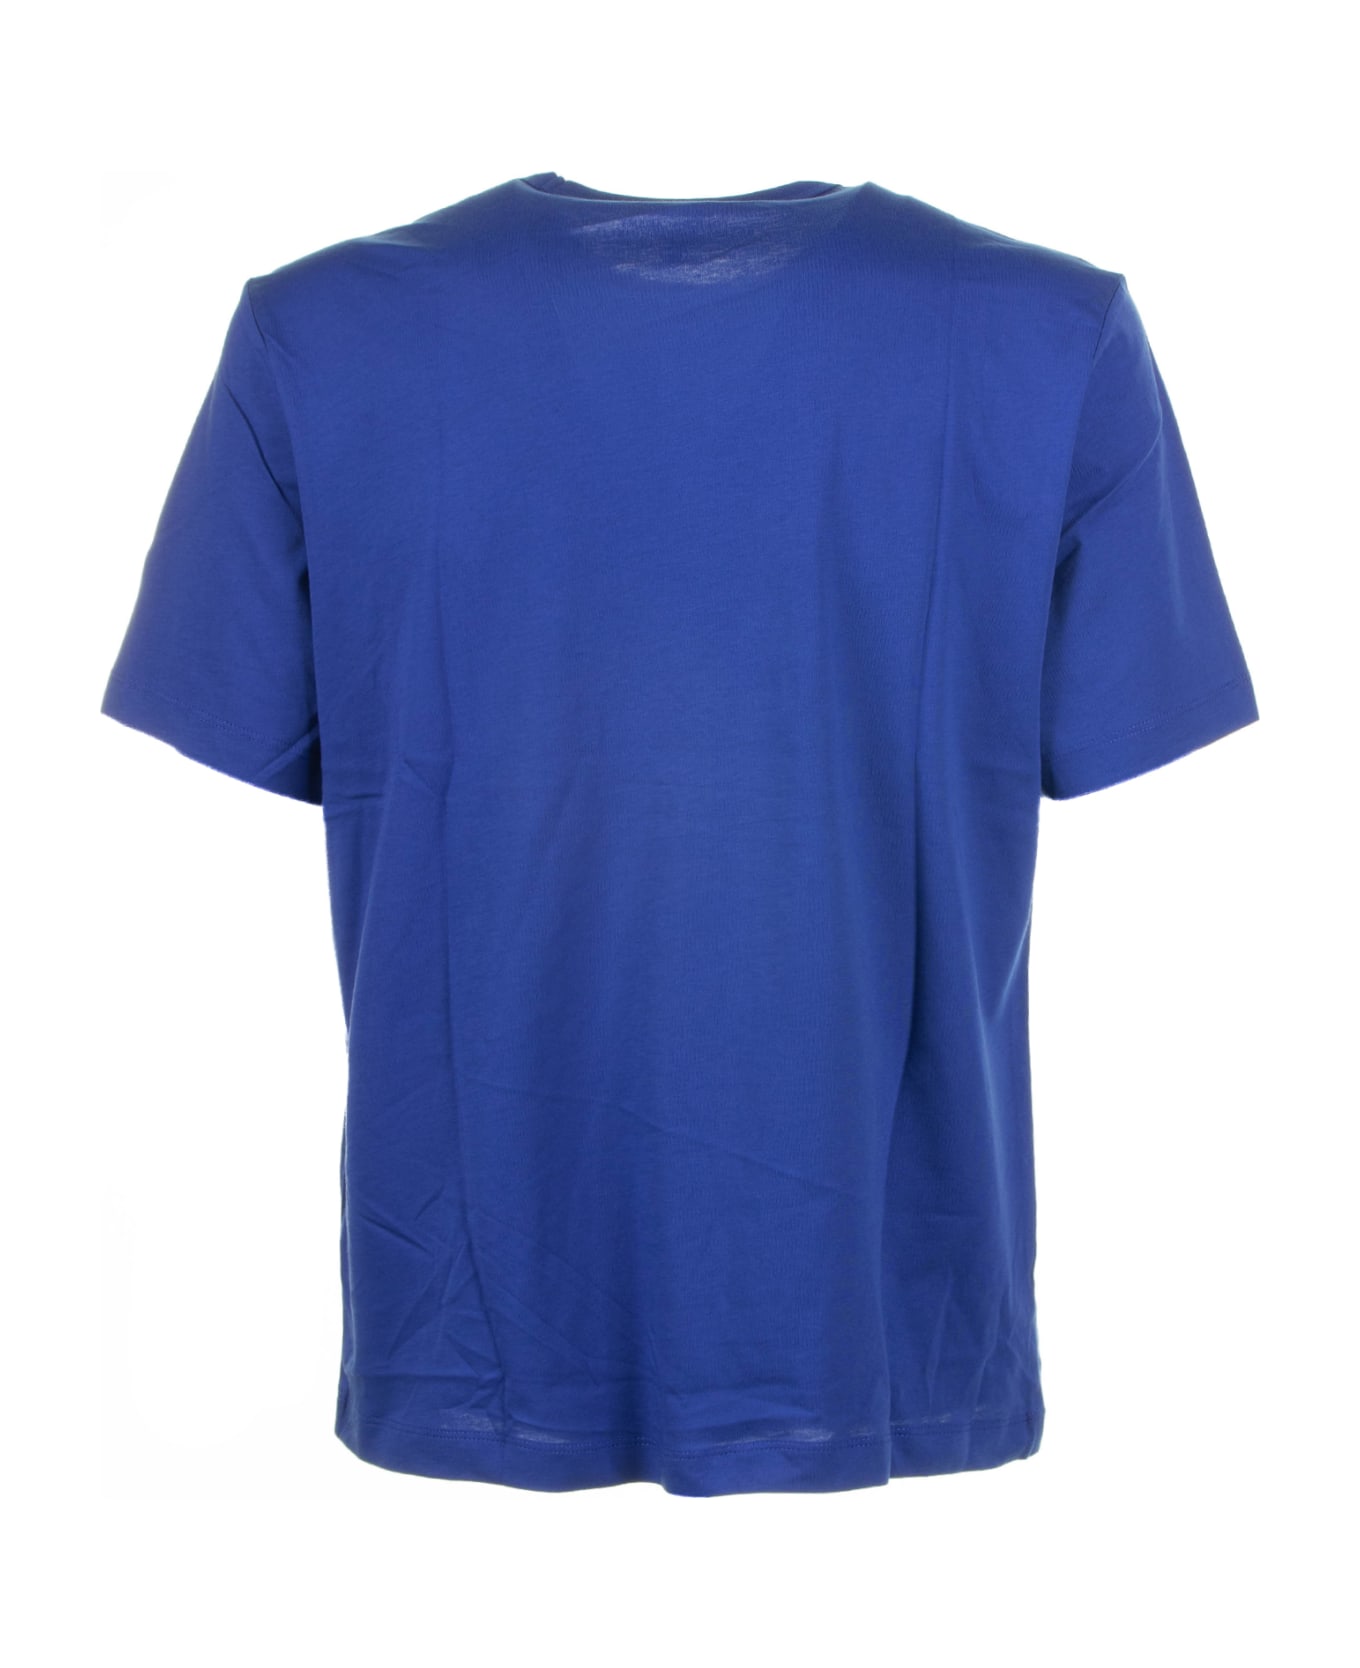 Blauer Blue Crew Neck T-shirt In Cotton - MOLTO BLU